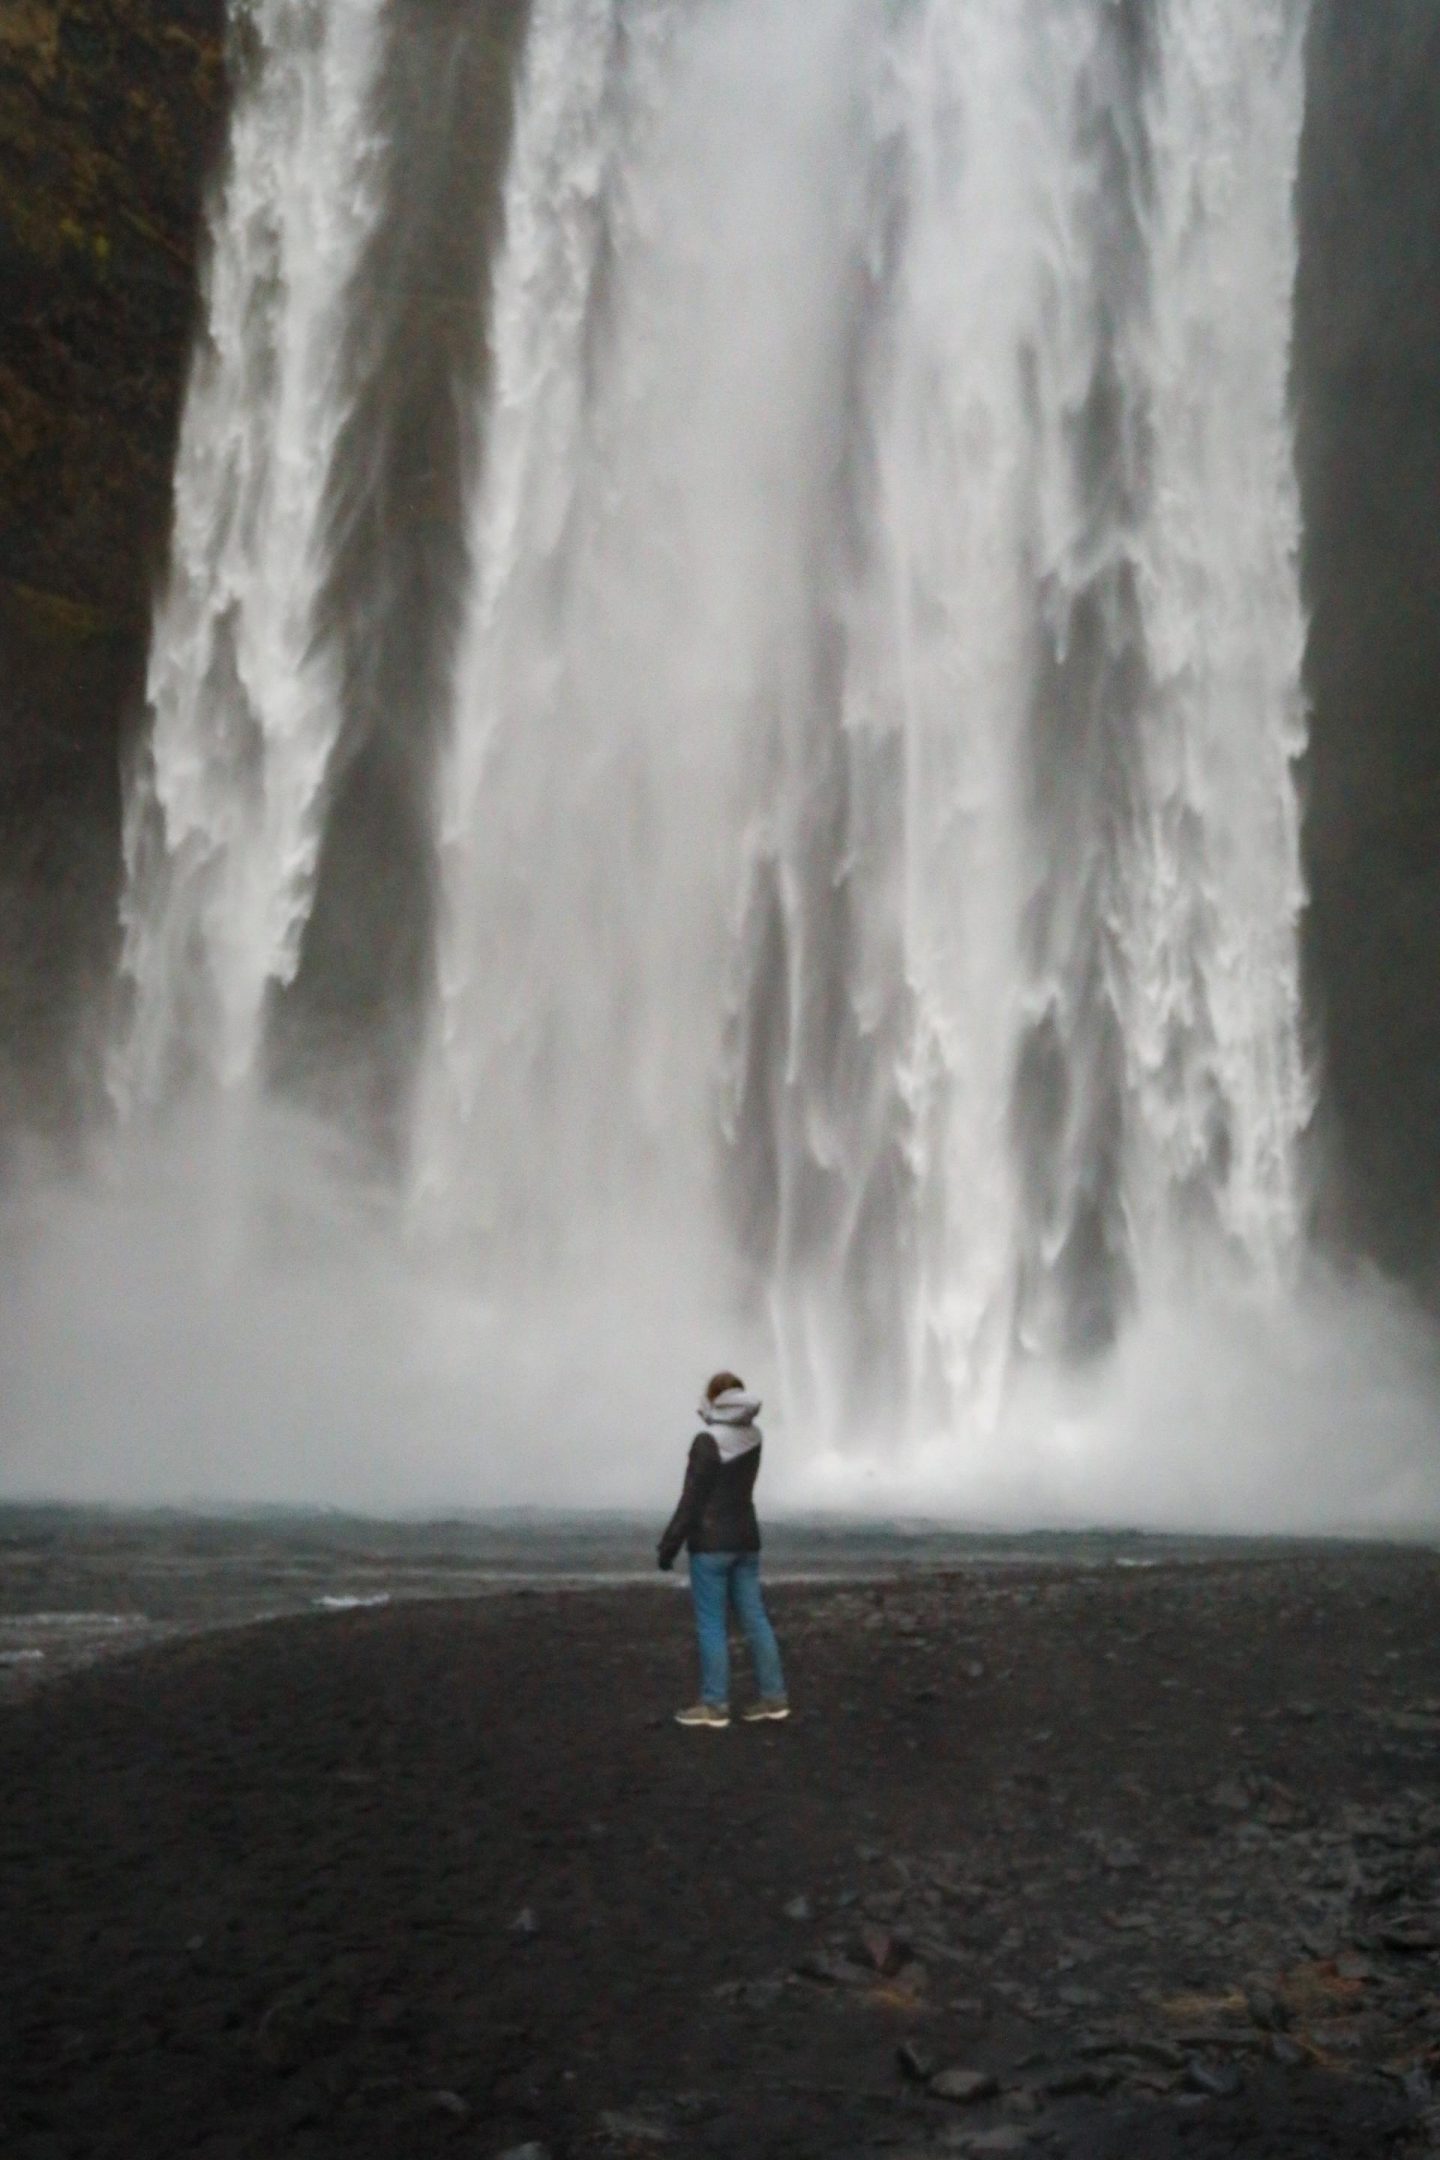 La cascade Skógafoss en islande